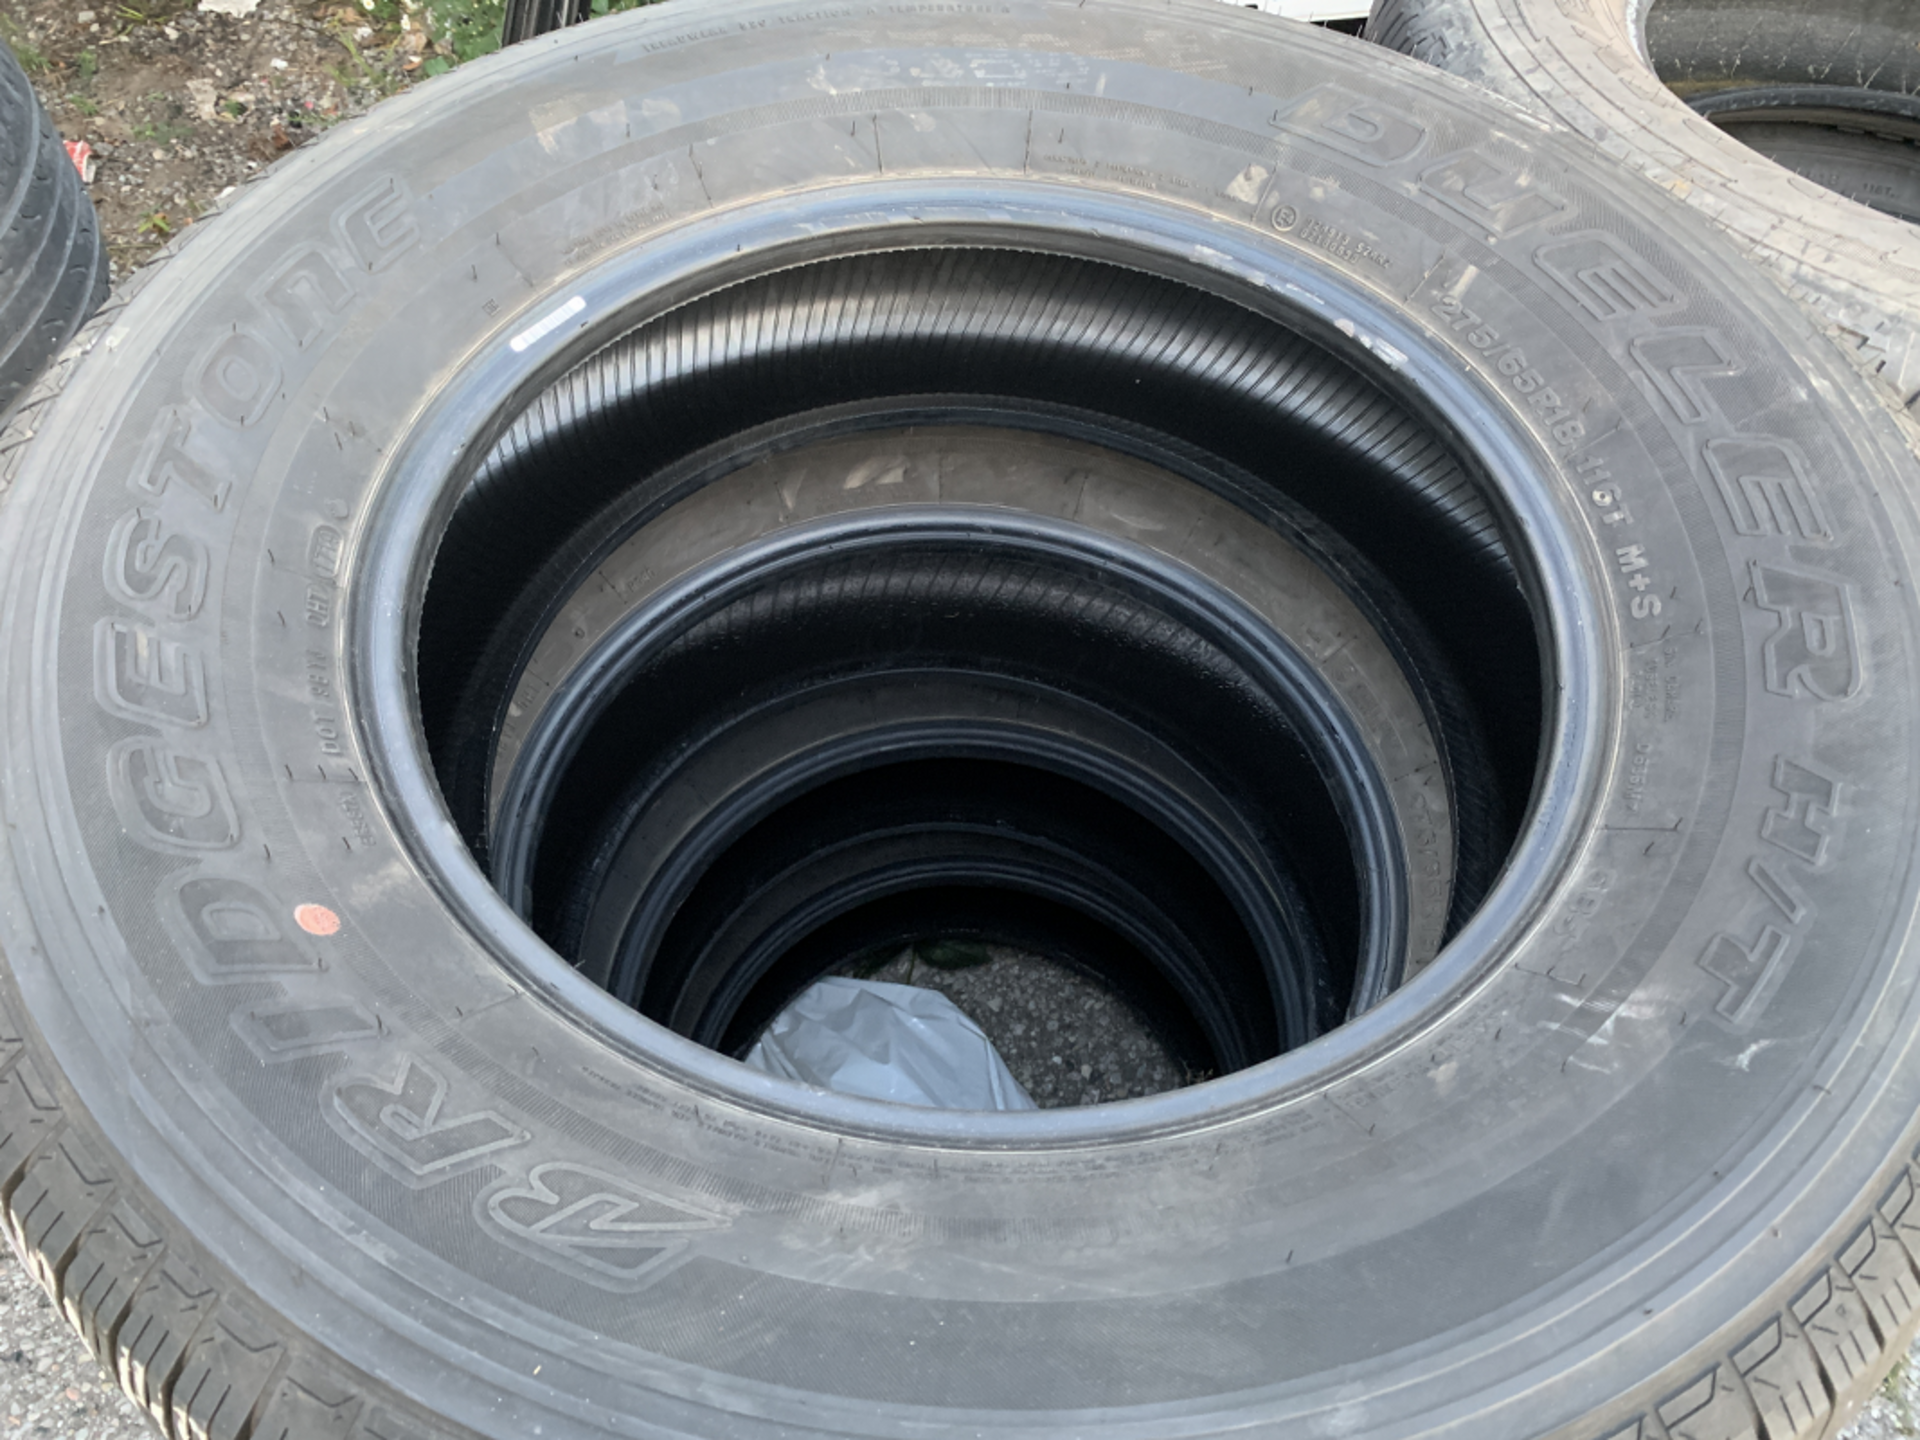 Bridgestone - Dueler H/T All Season Tires - Size 275/65/R18 - Image 3 of 5